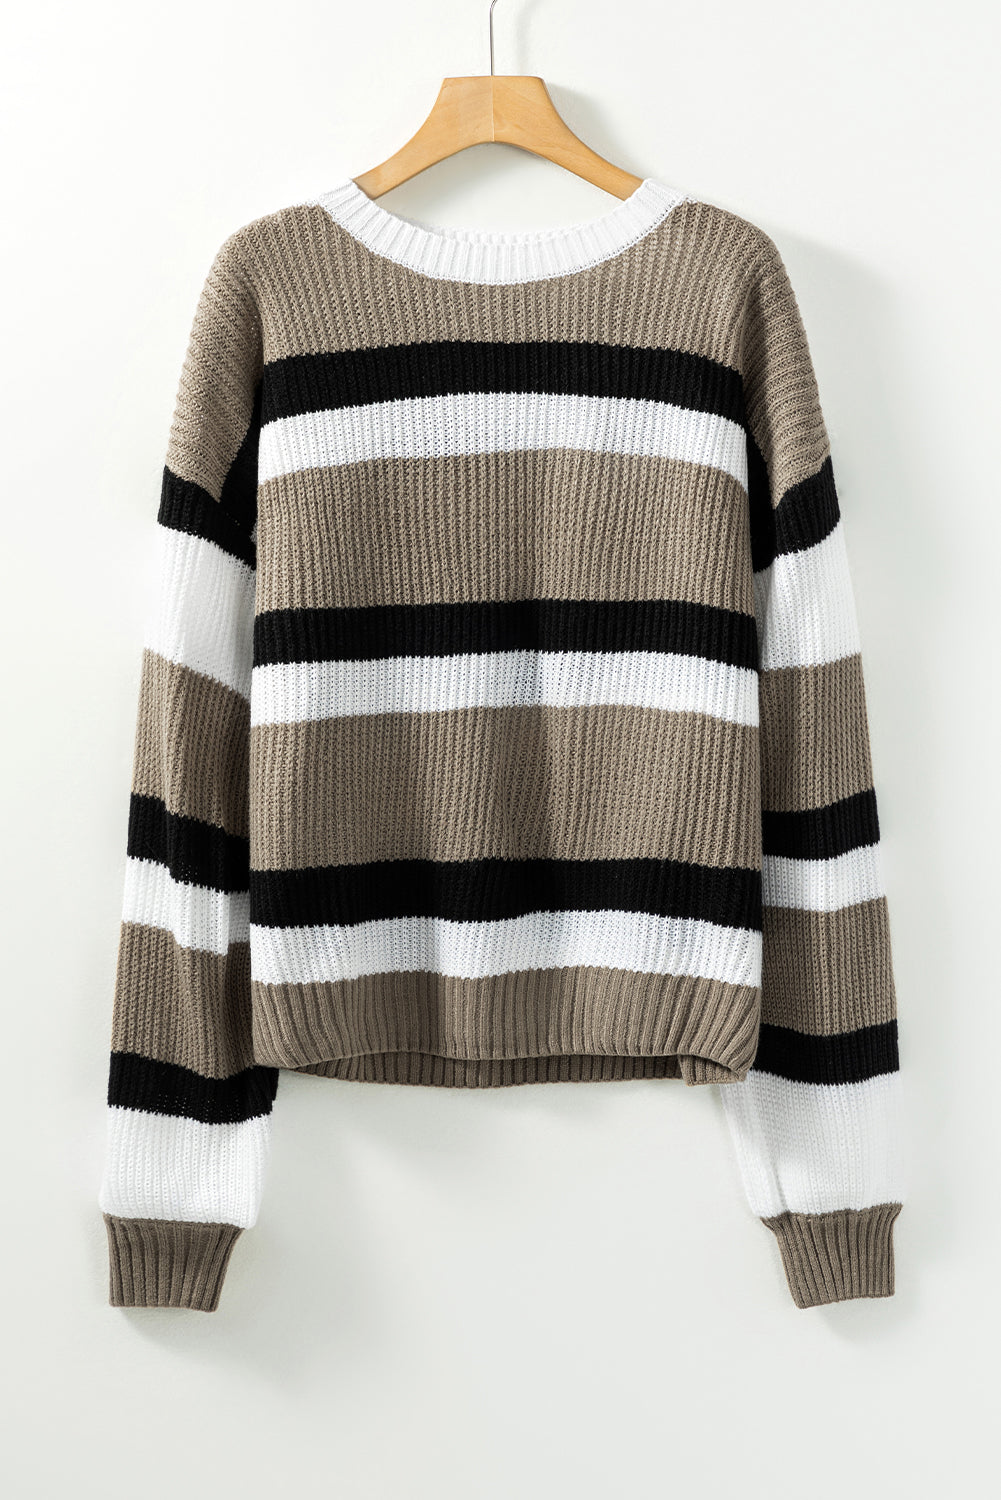 Gray Striped Colorblock Pattern Knit Sweater